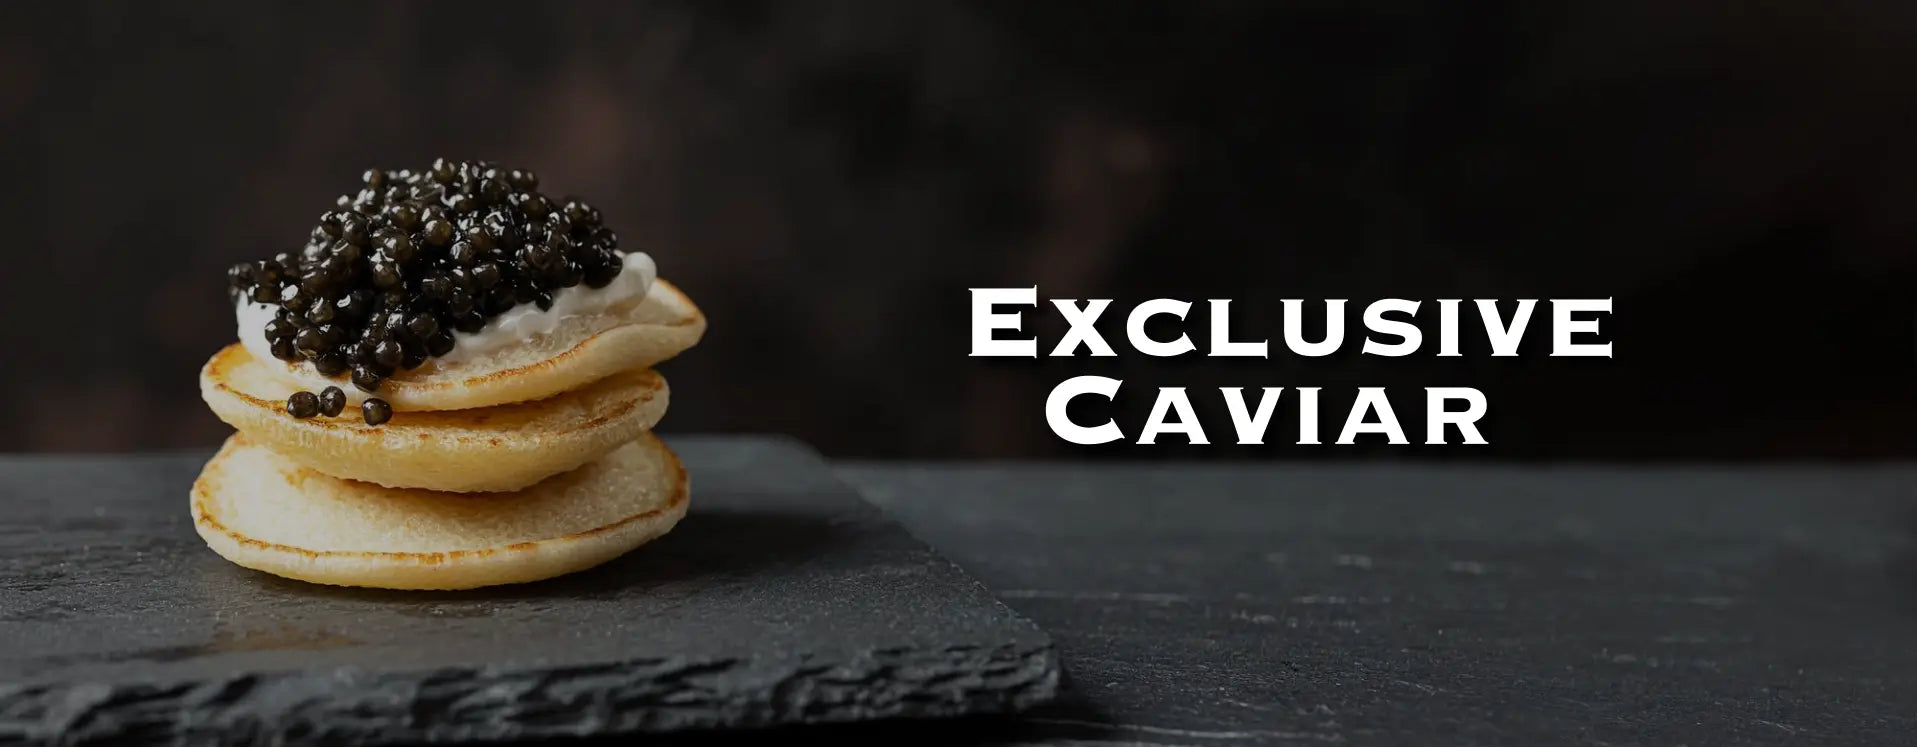 Exclusive caviar